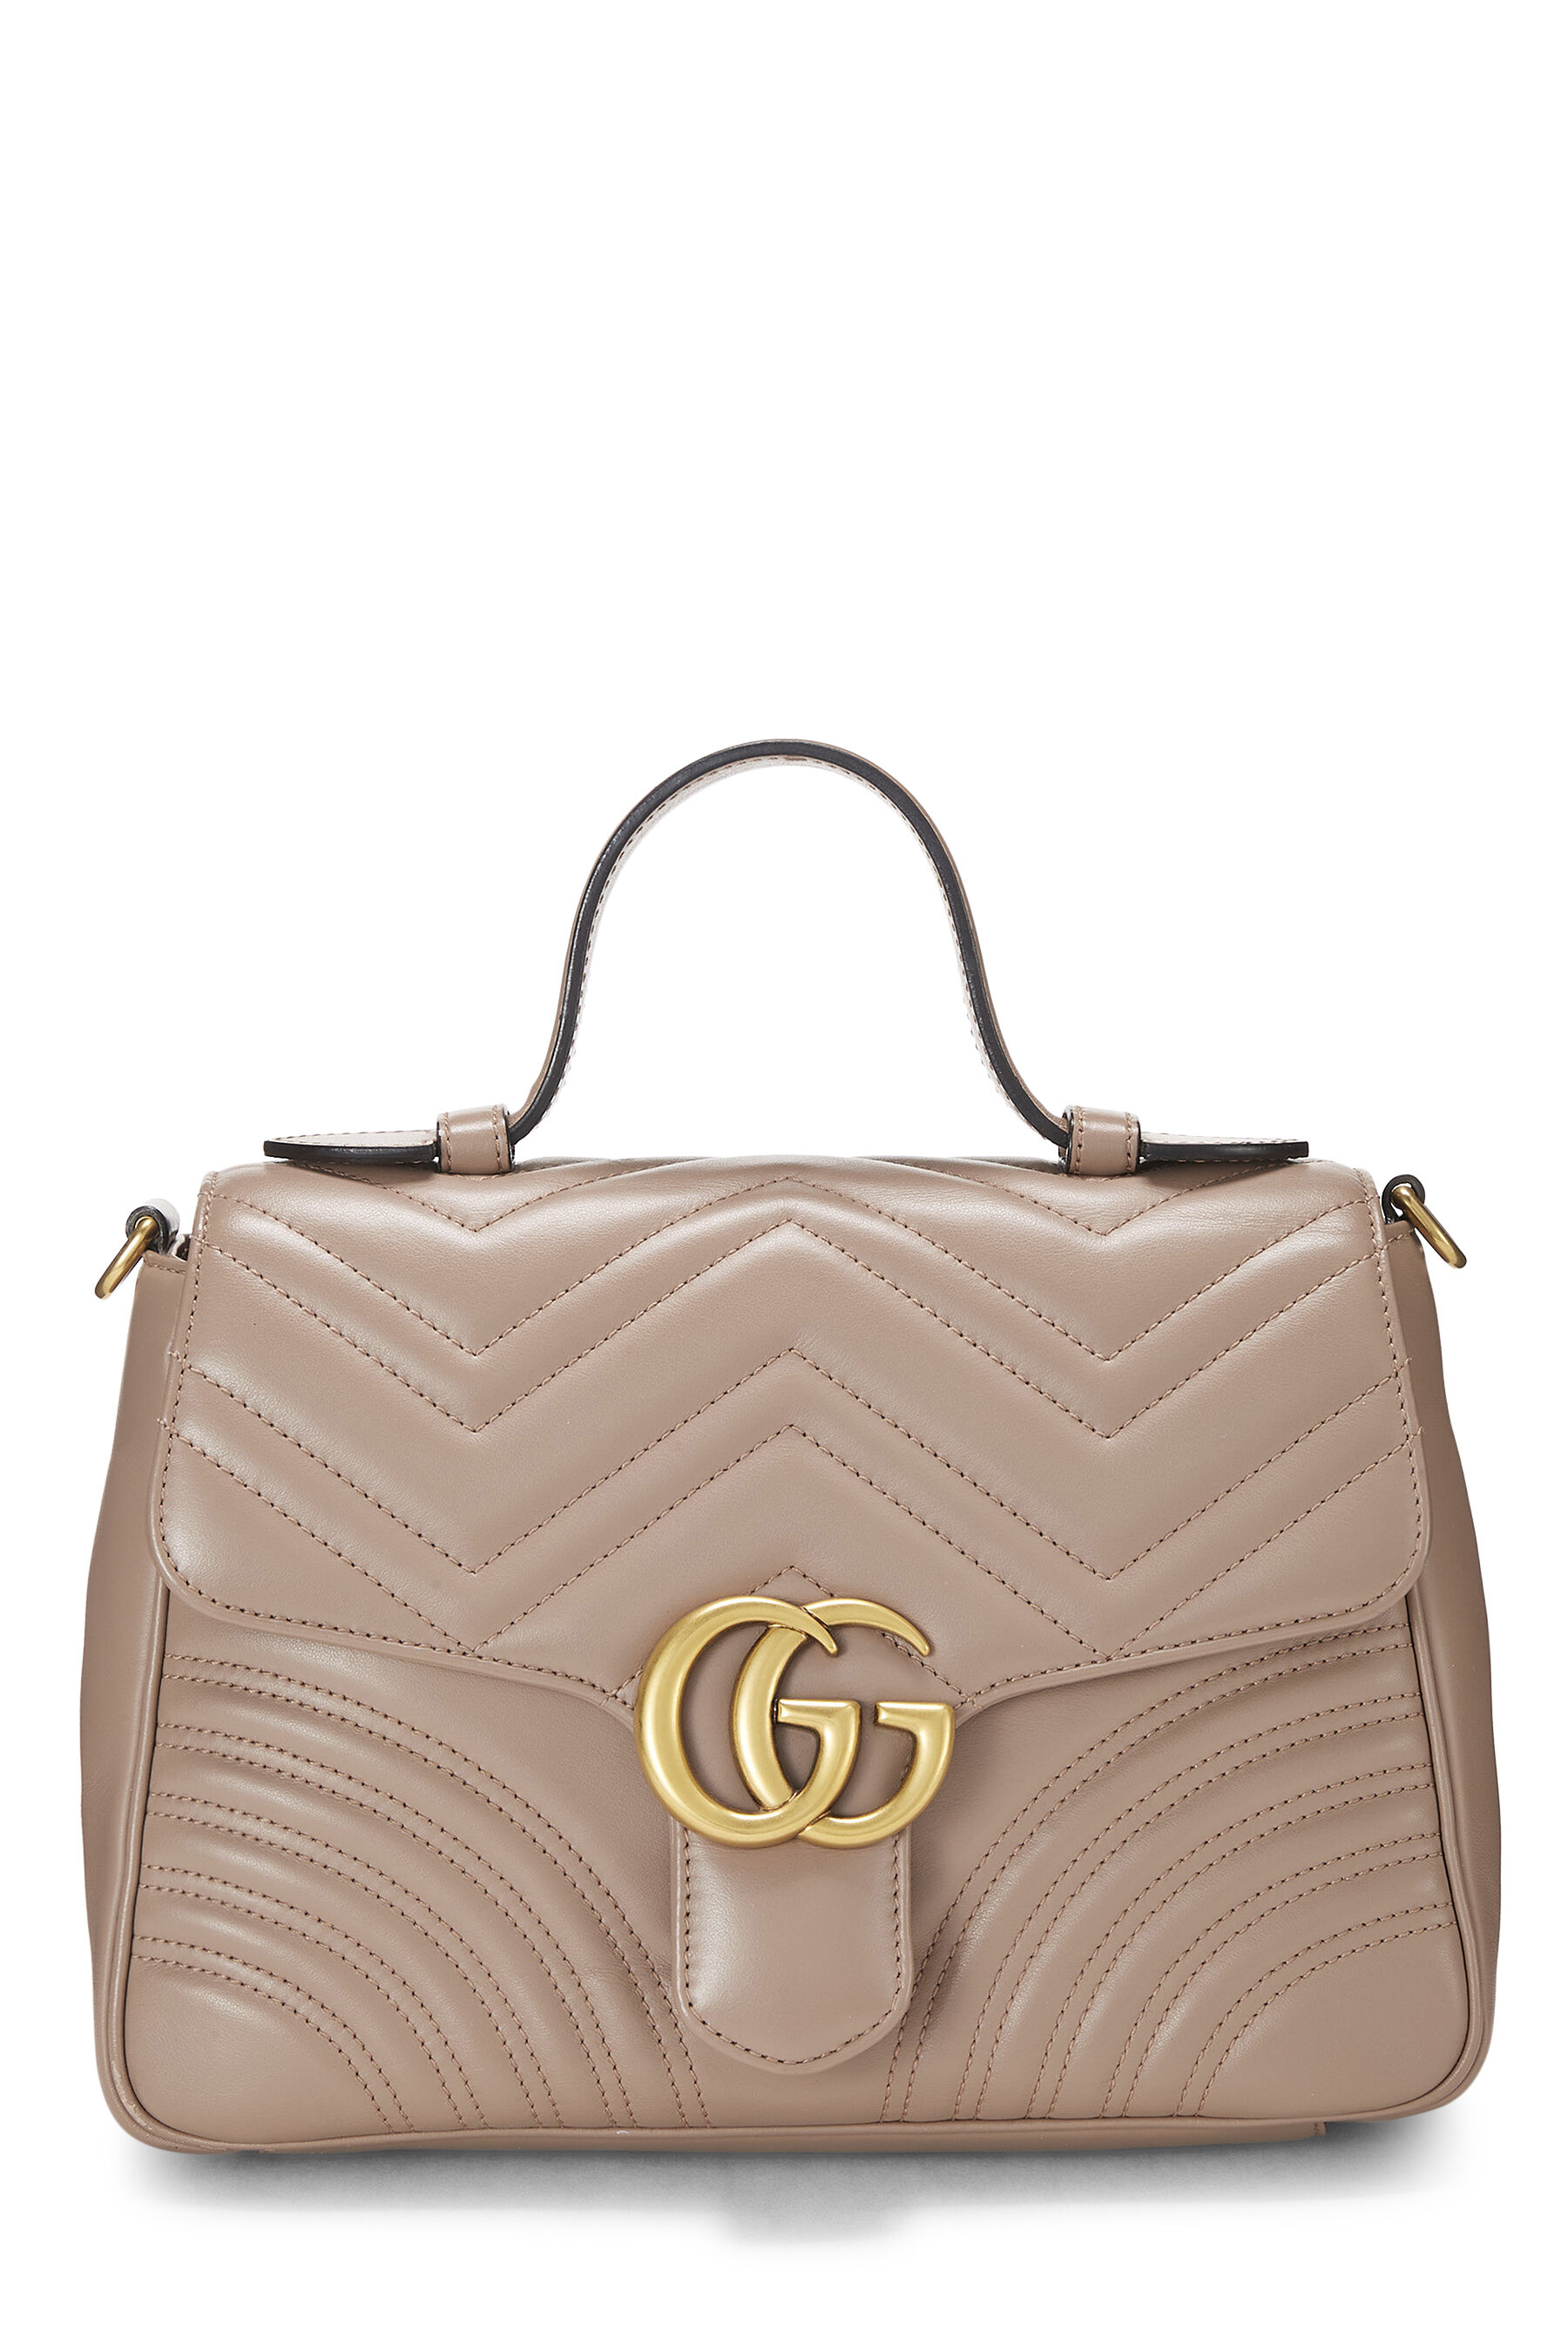 Gucci Grey Leather GG Marmont Top Handle Flap Bag QFB1I51LEB000